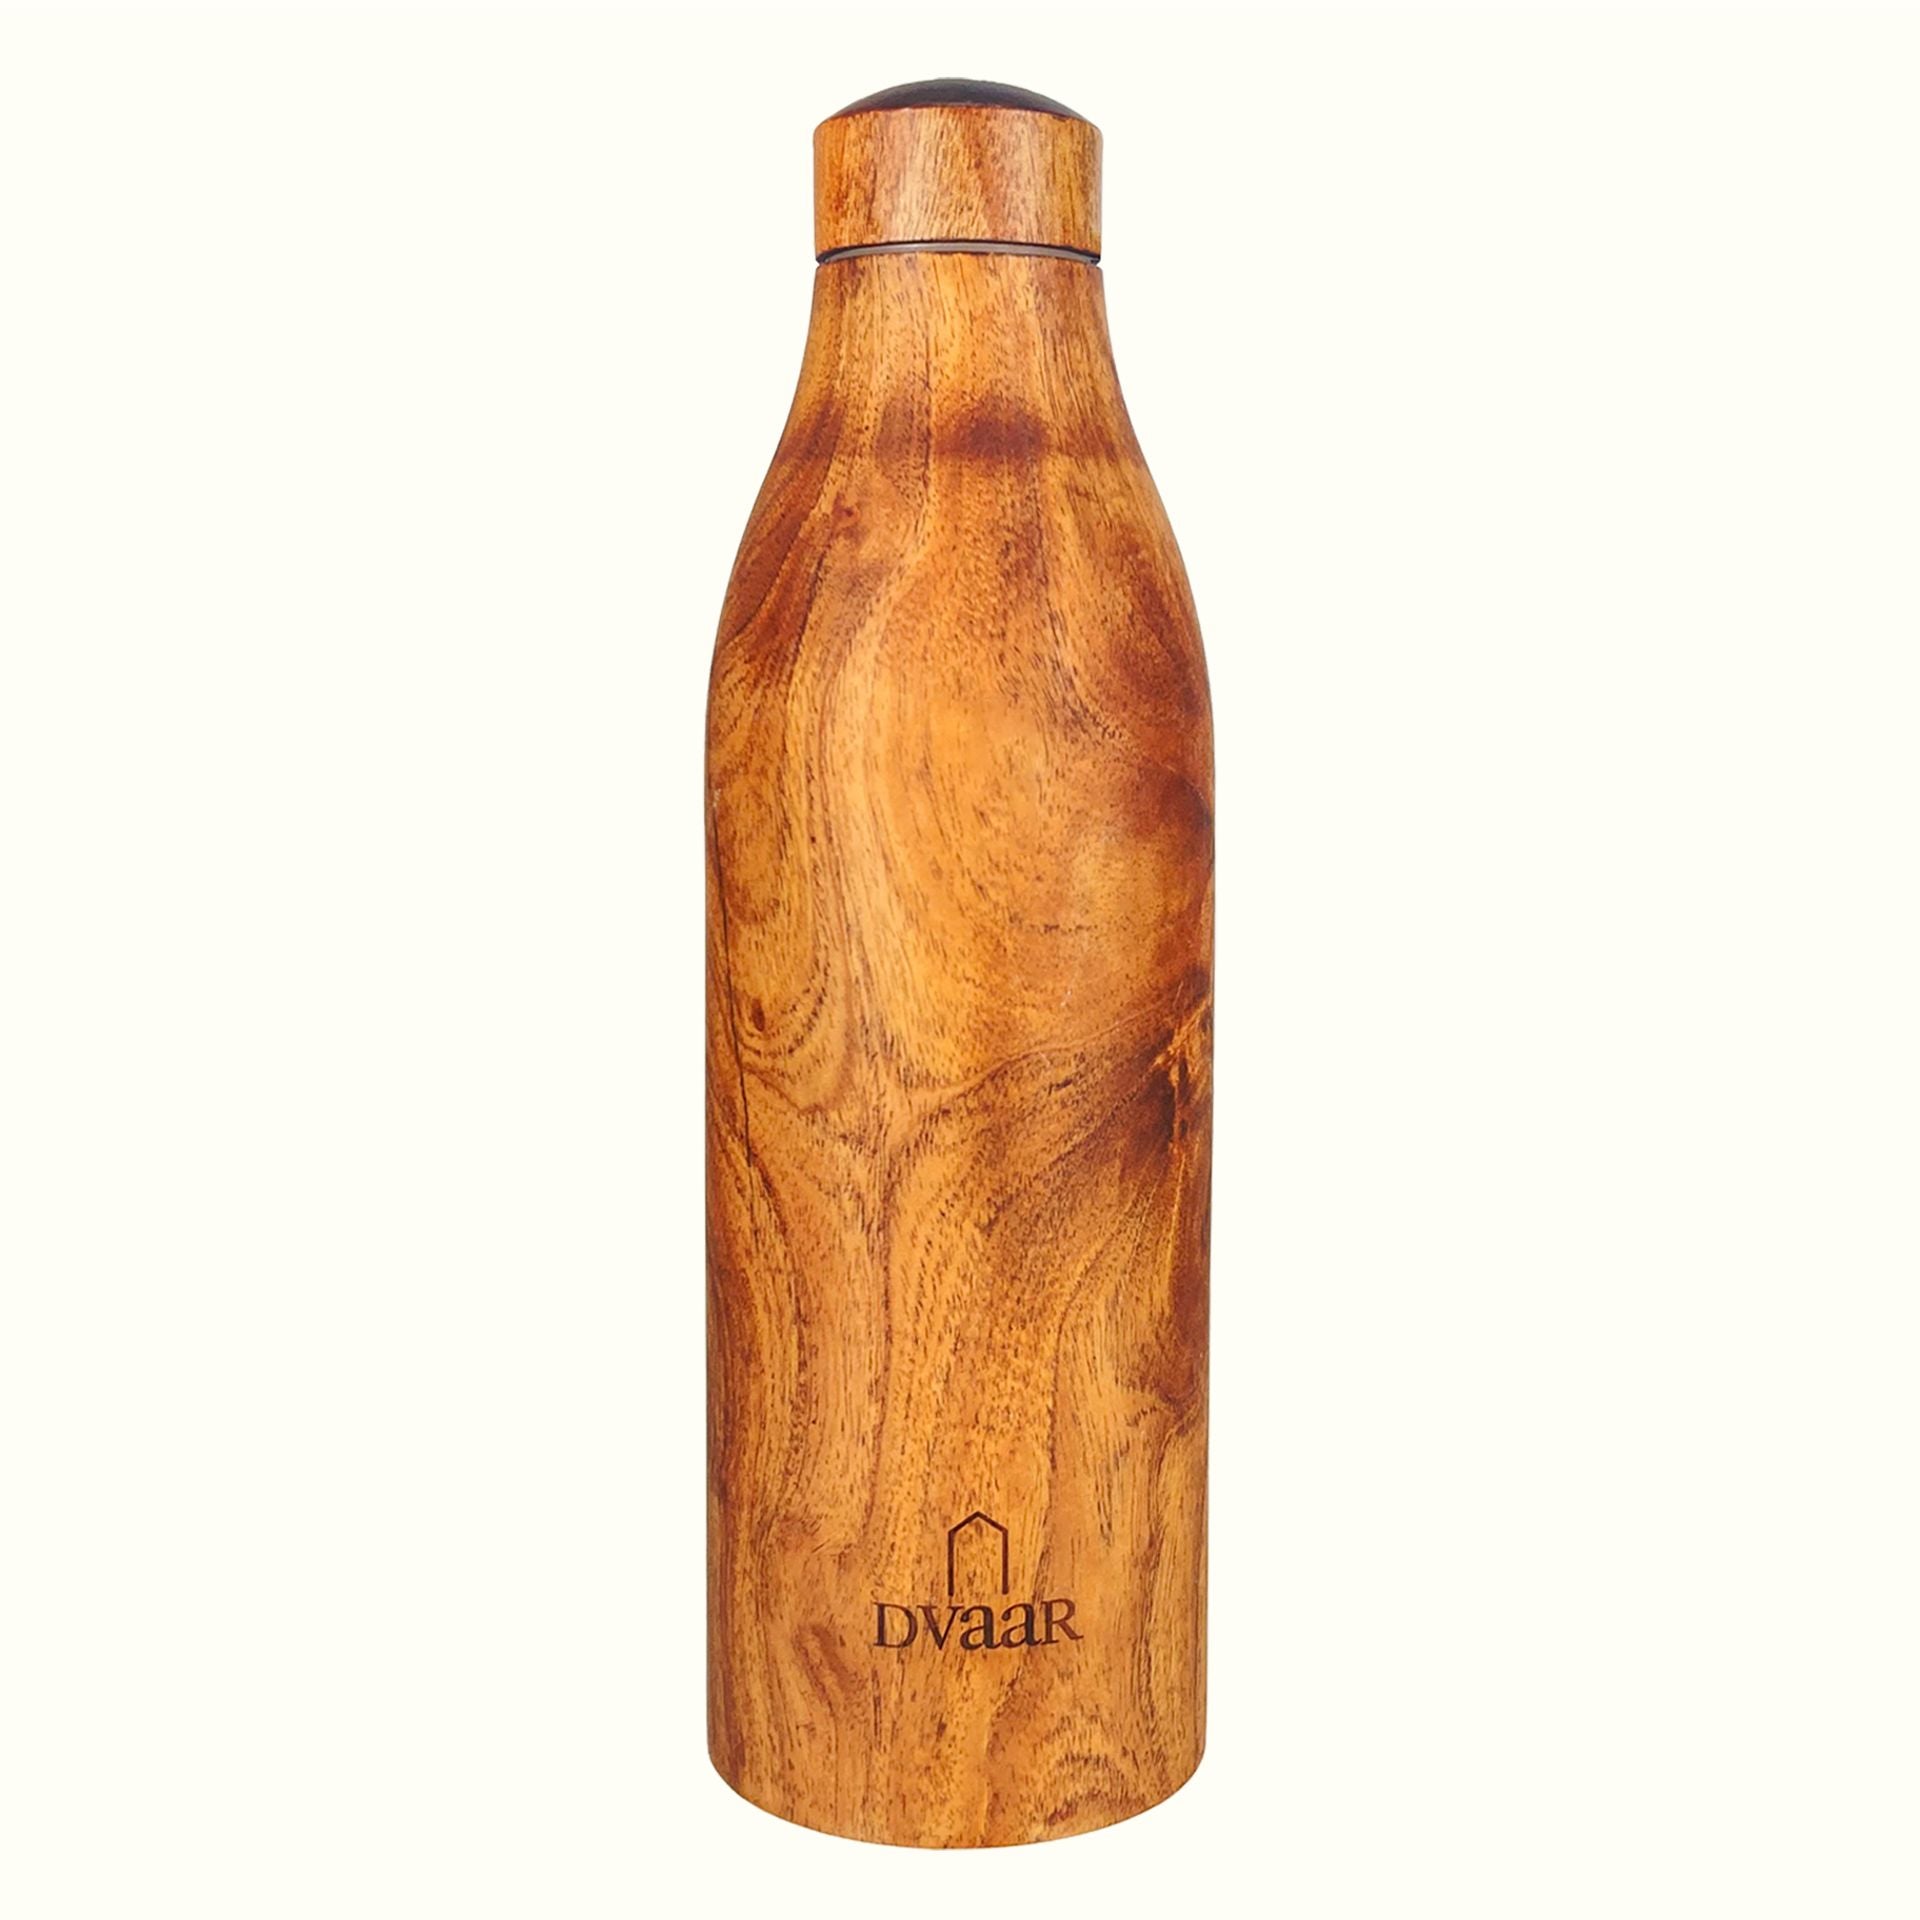 The Wooden Copper Bottle Mahogany Wood 500ml - hfnl!fe